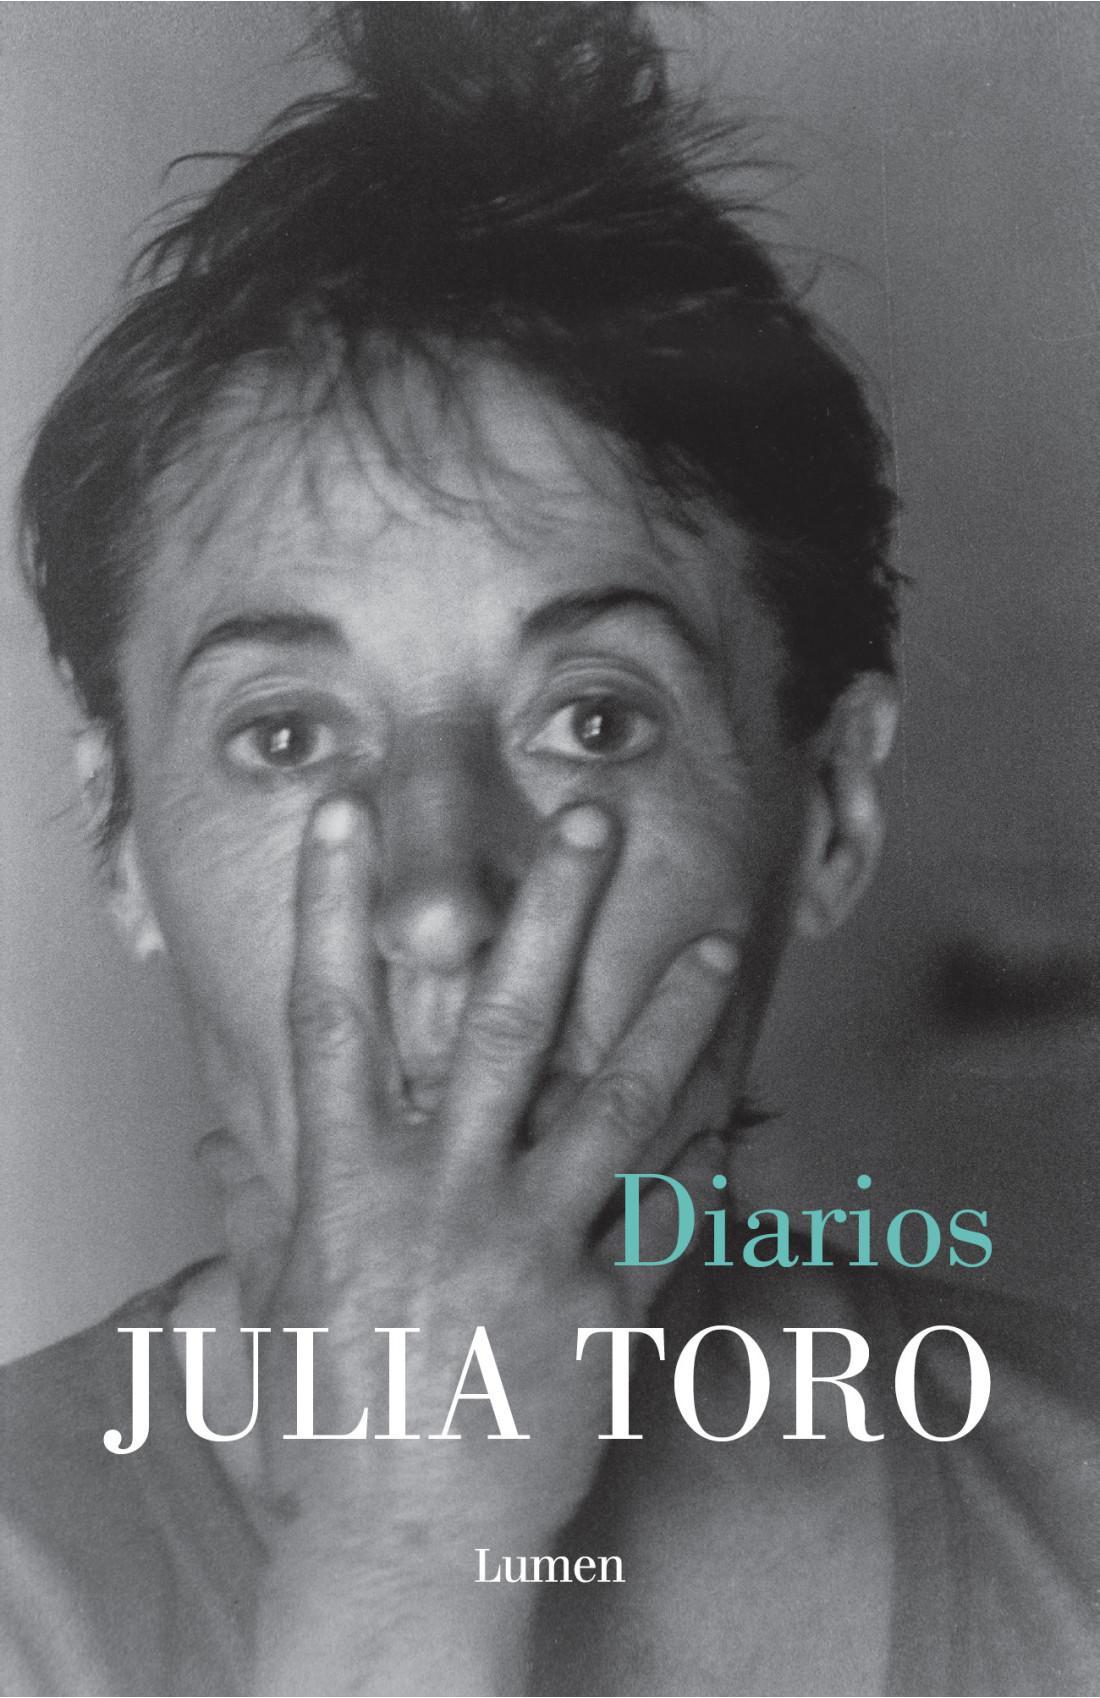 Diarios - Julia Toro